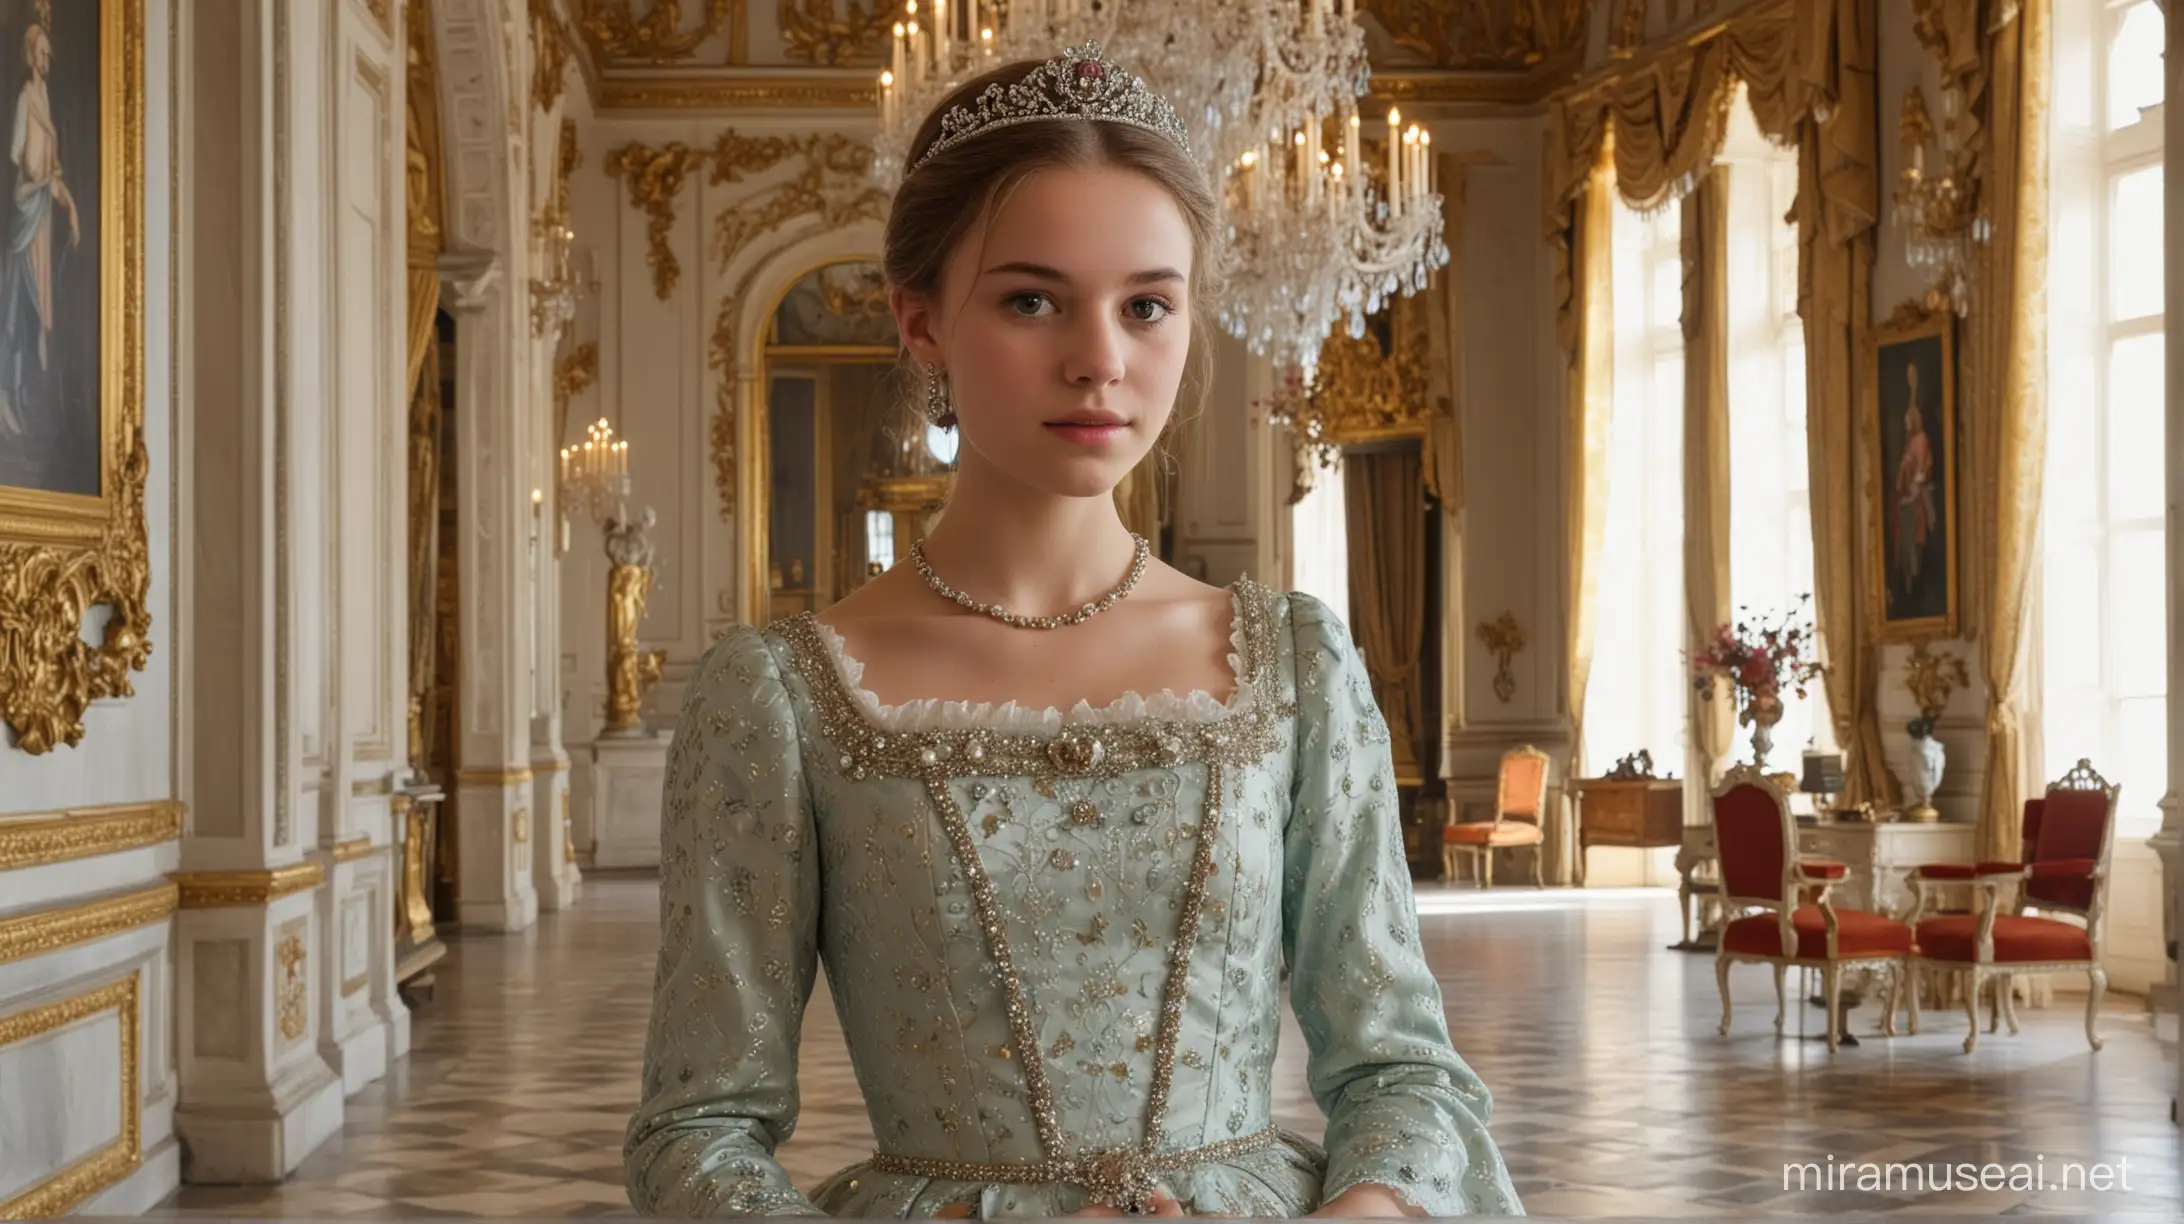 Teenage Princess Inside Royal Palace Room